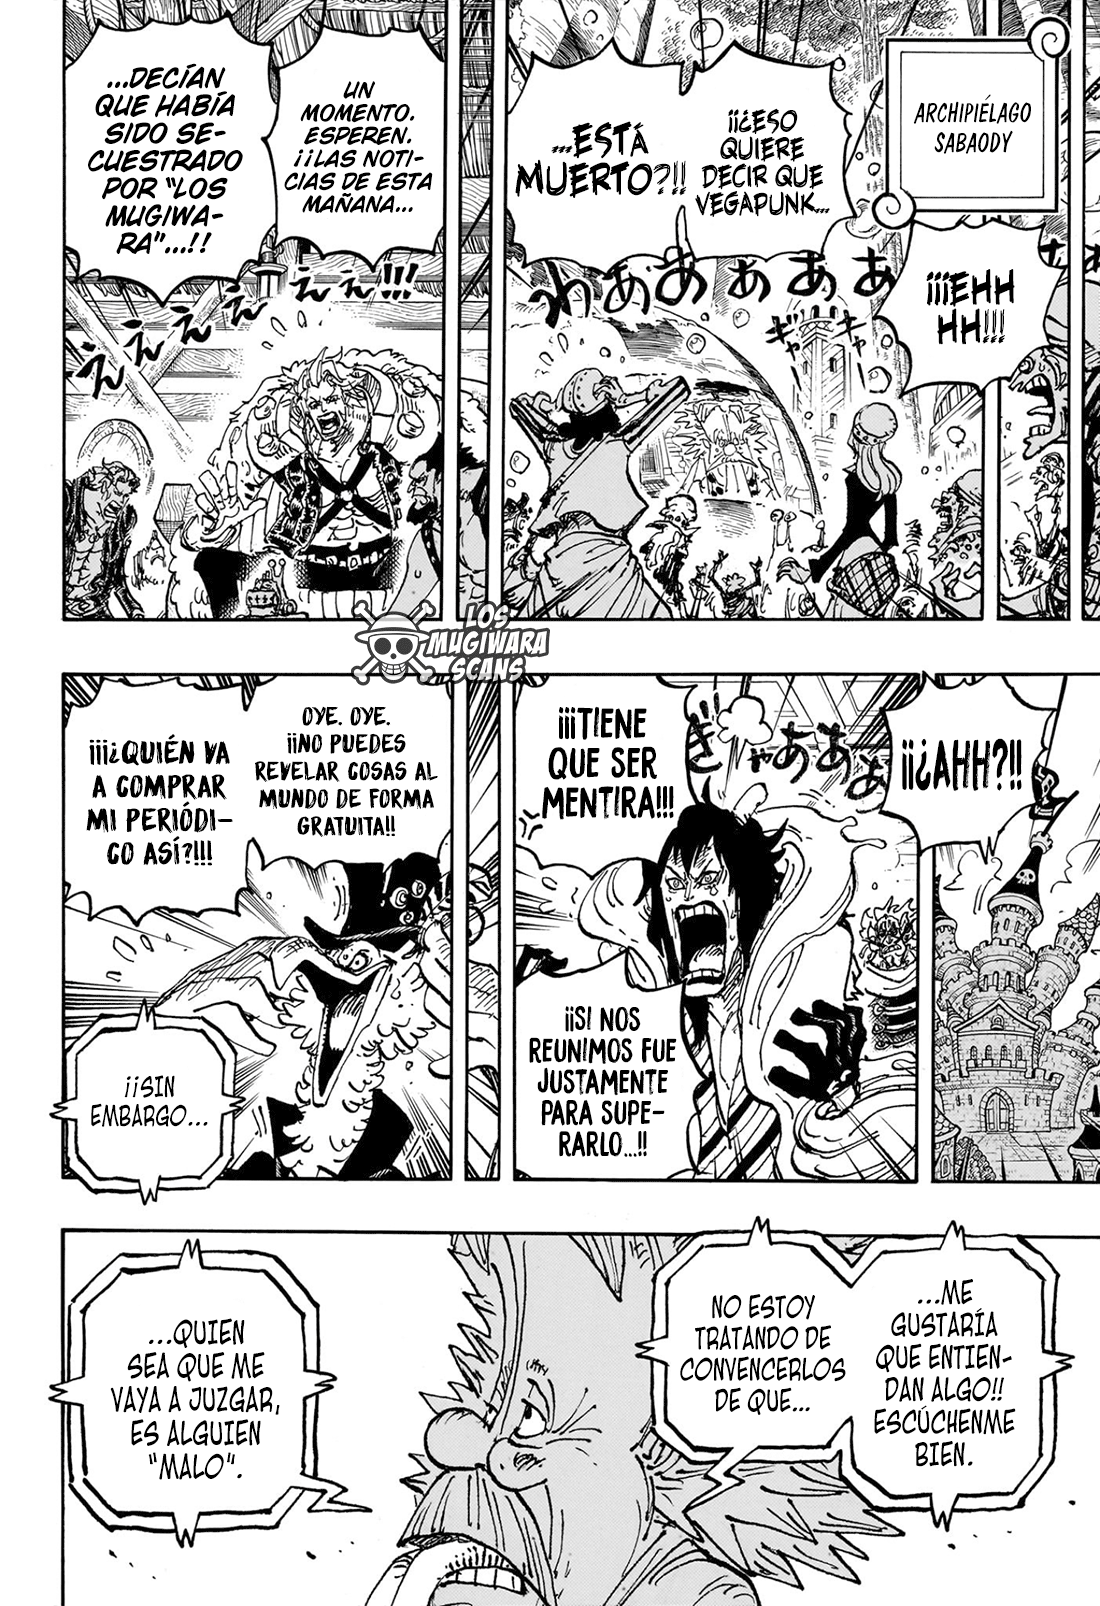 español - One Piece Manga 1113 [Español] 11